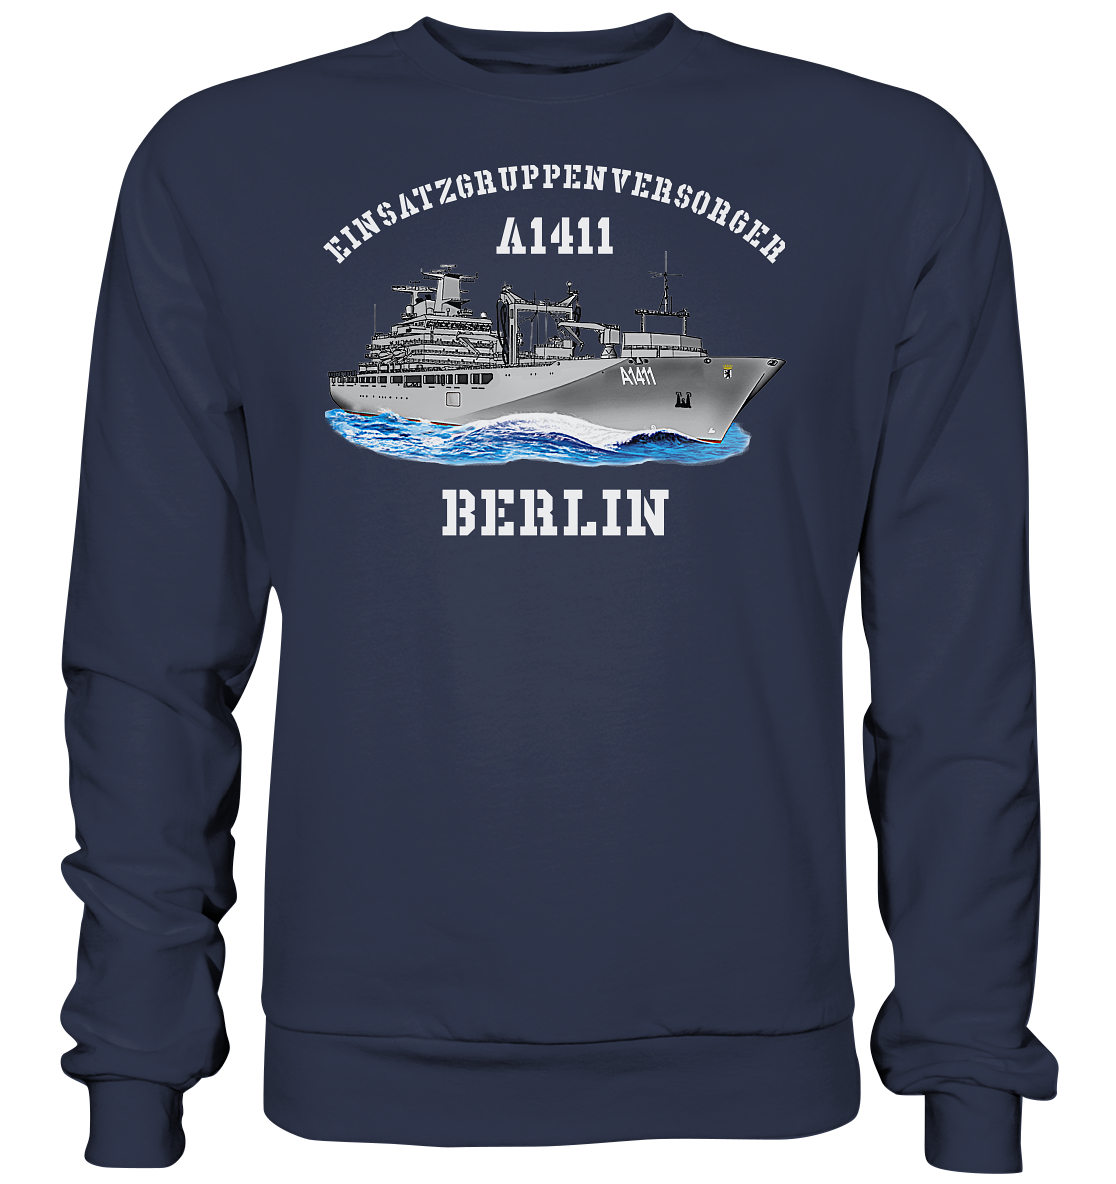 EGV A1411 BERLIN - Premium Sweatshirt